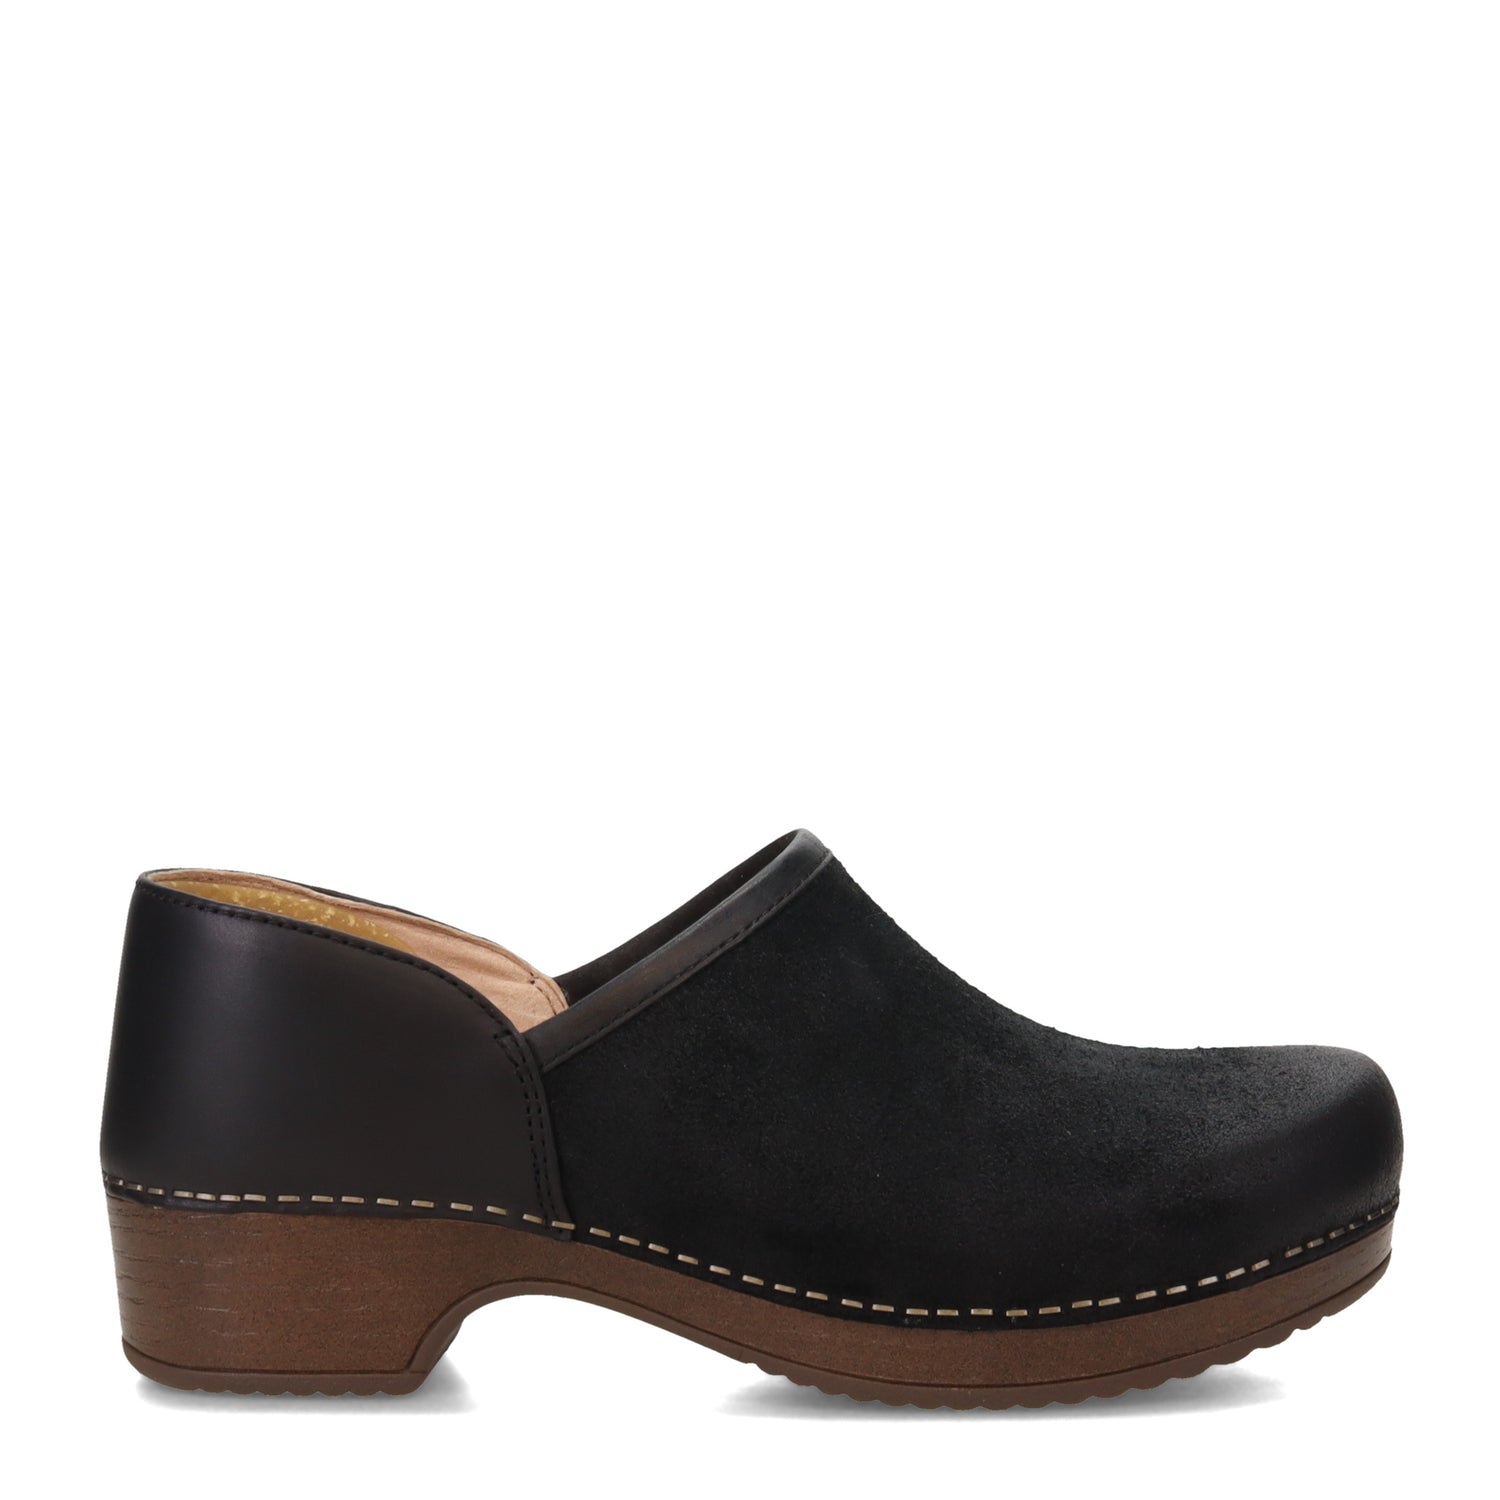 Peltz Shoes  Women's Dansko Brenna Clog Black 9431-477800